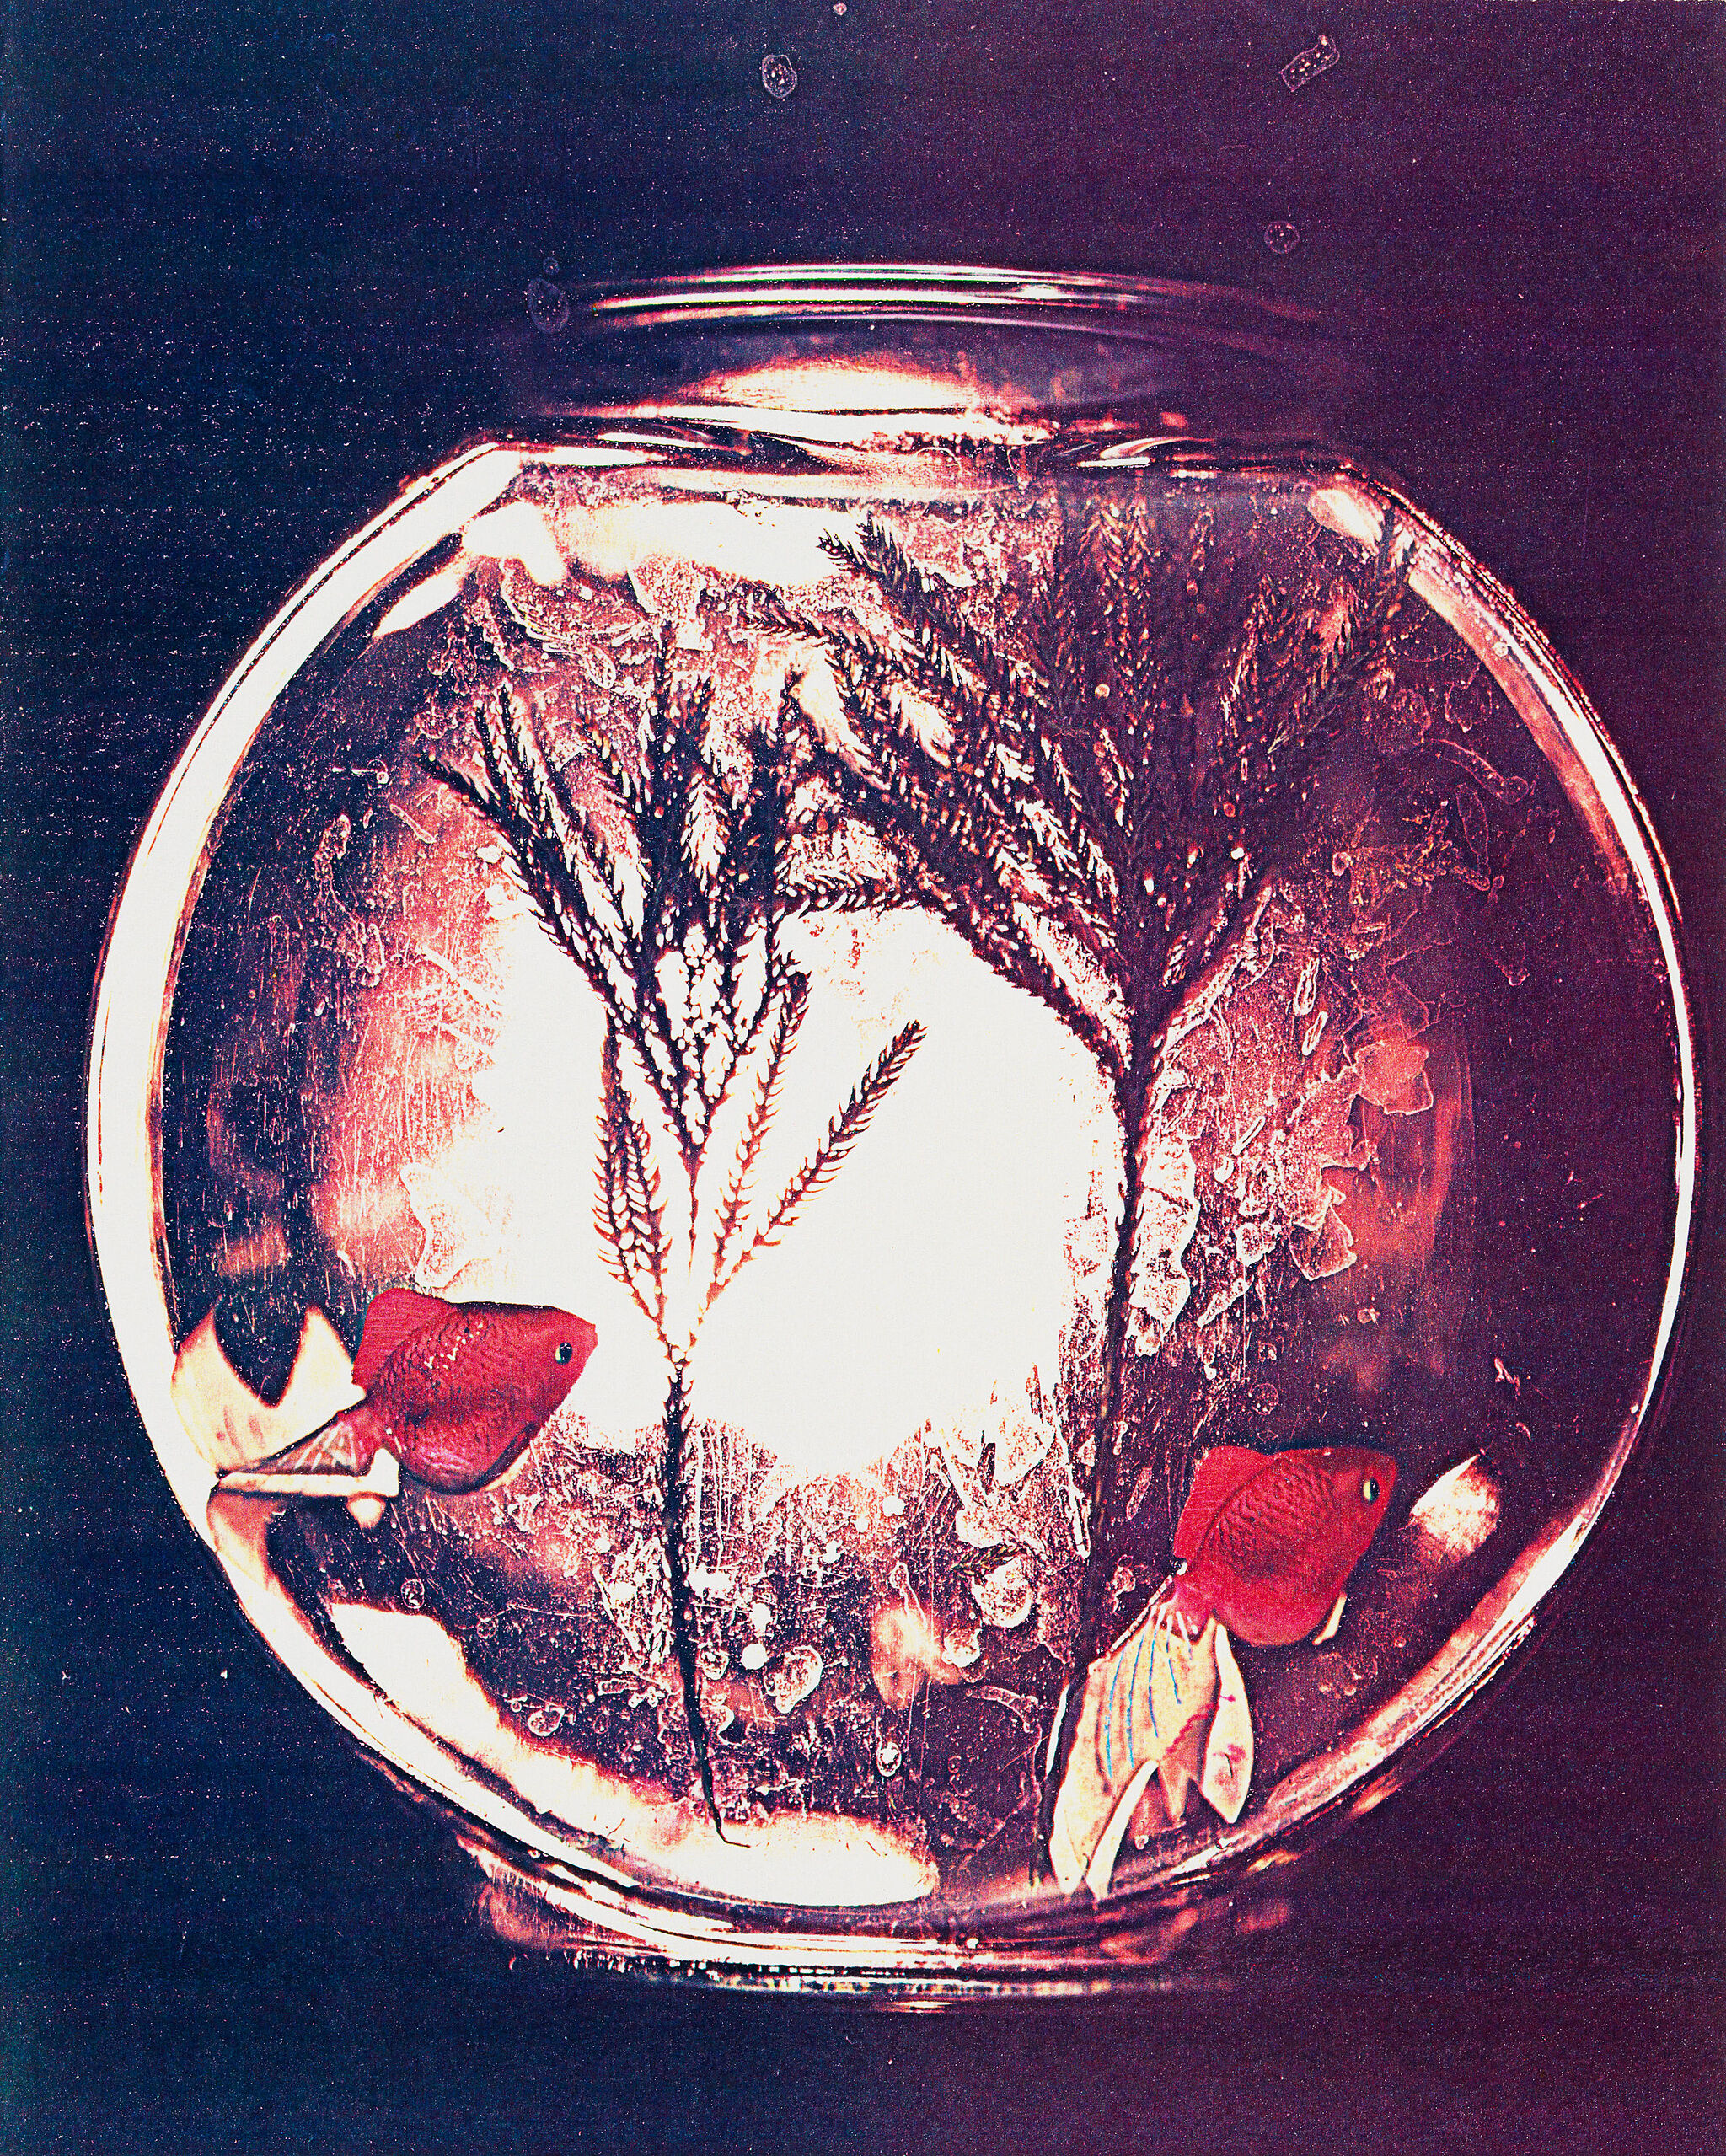 Artwork depicting a fishbowl.